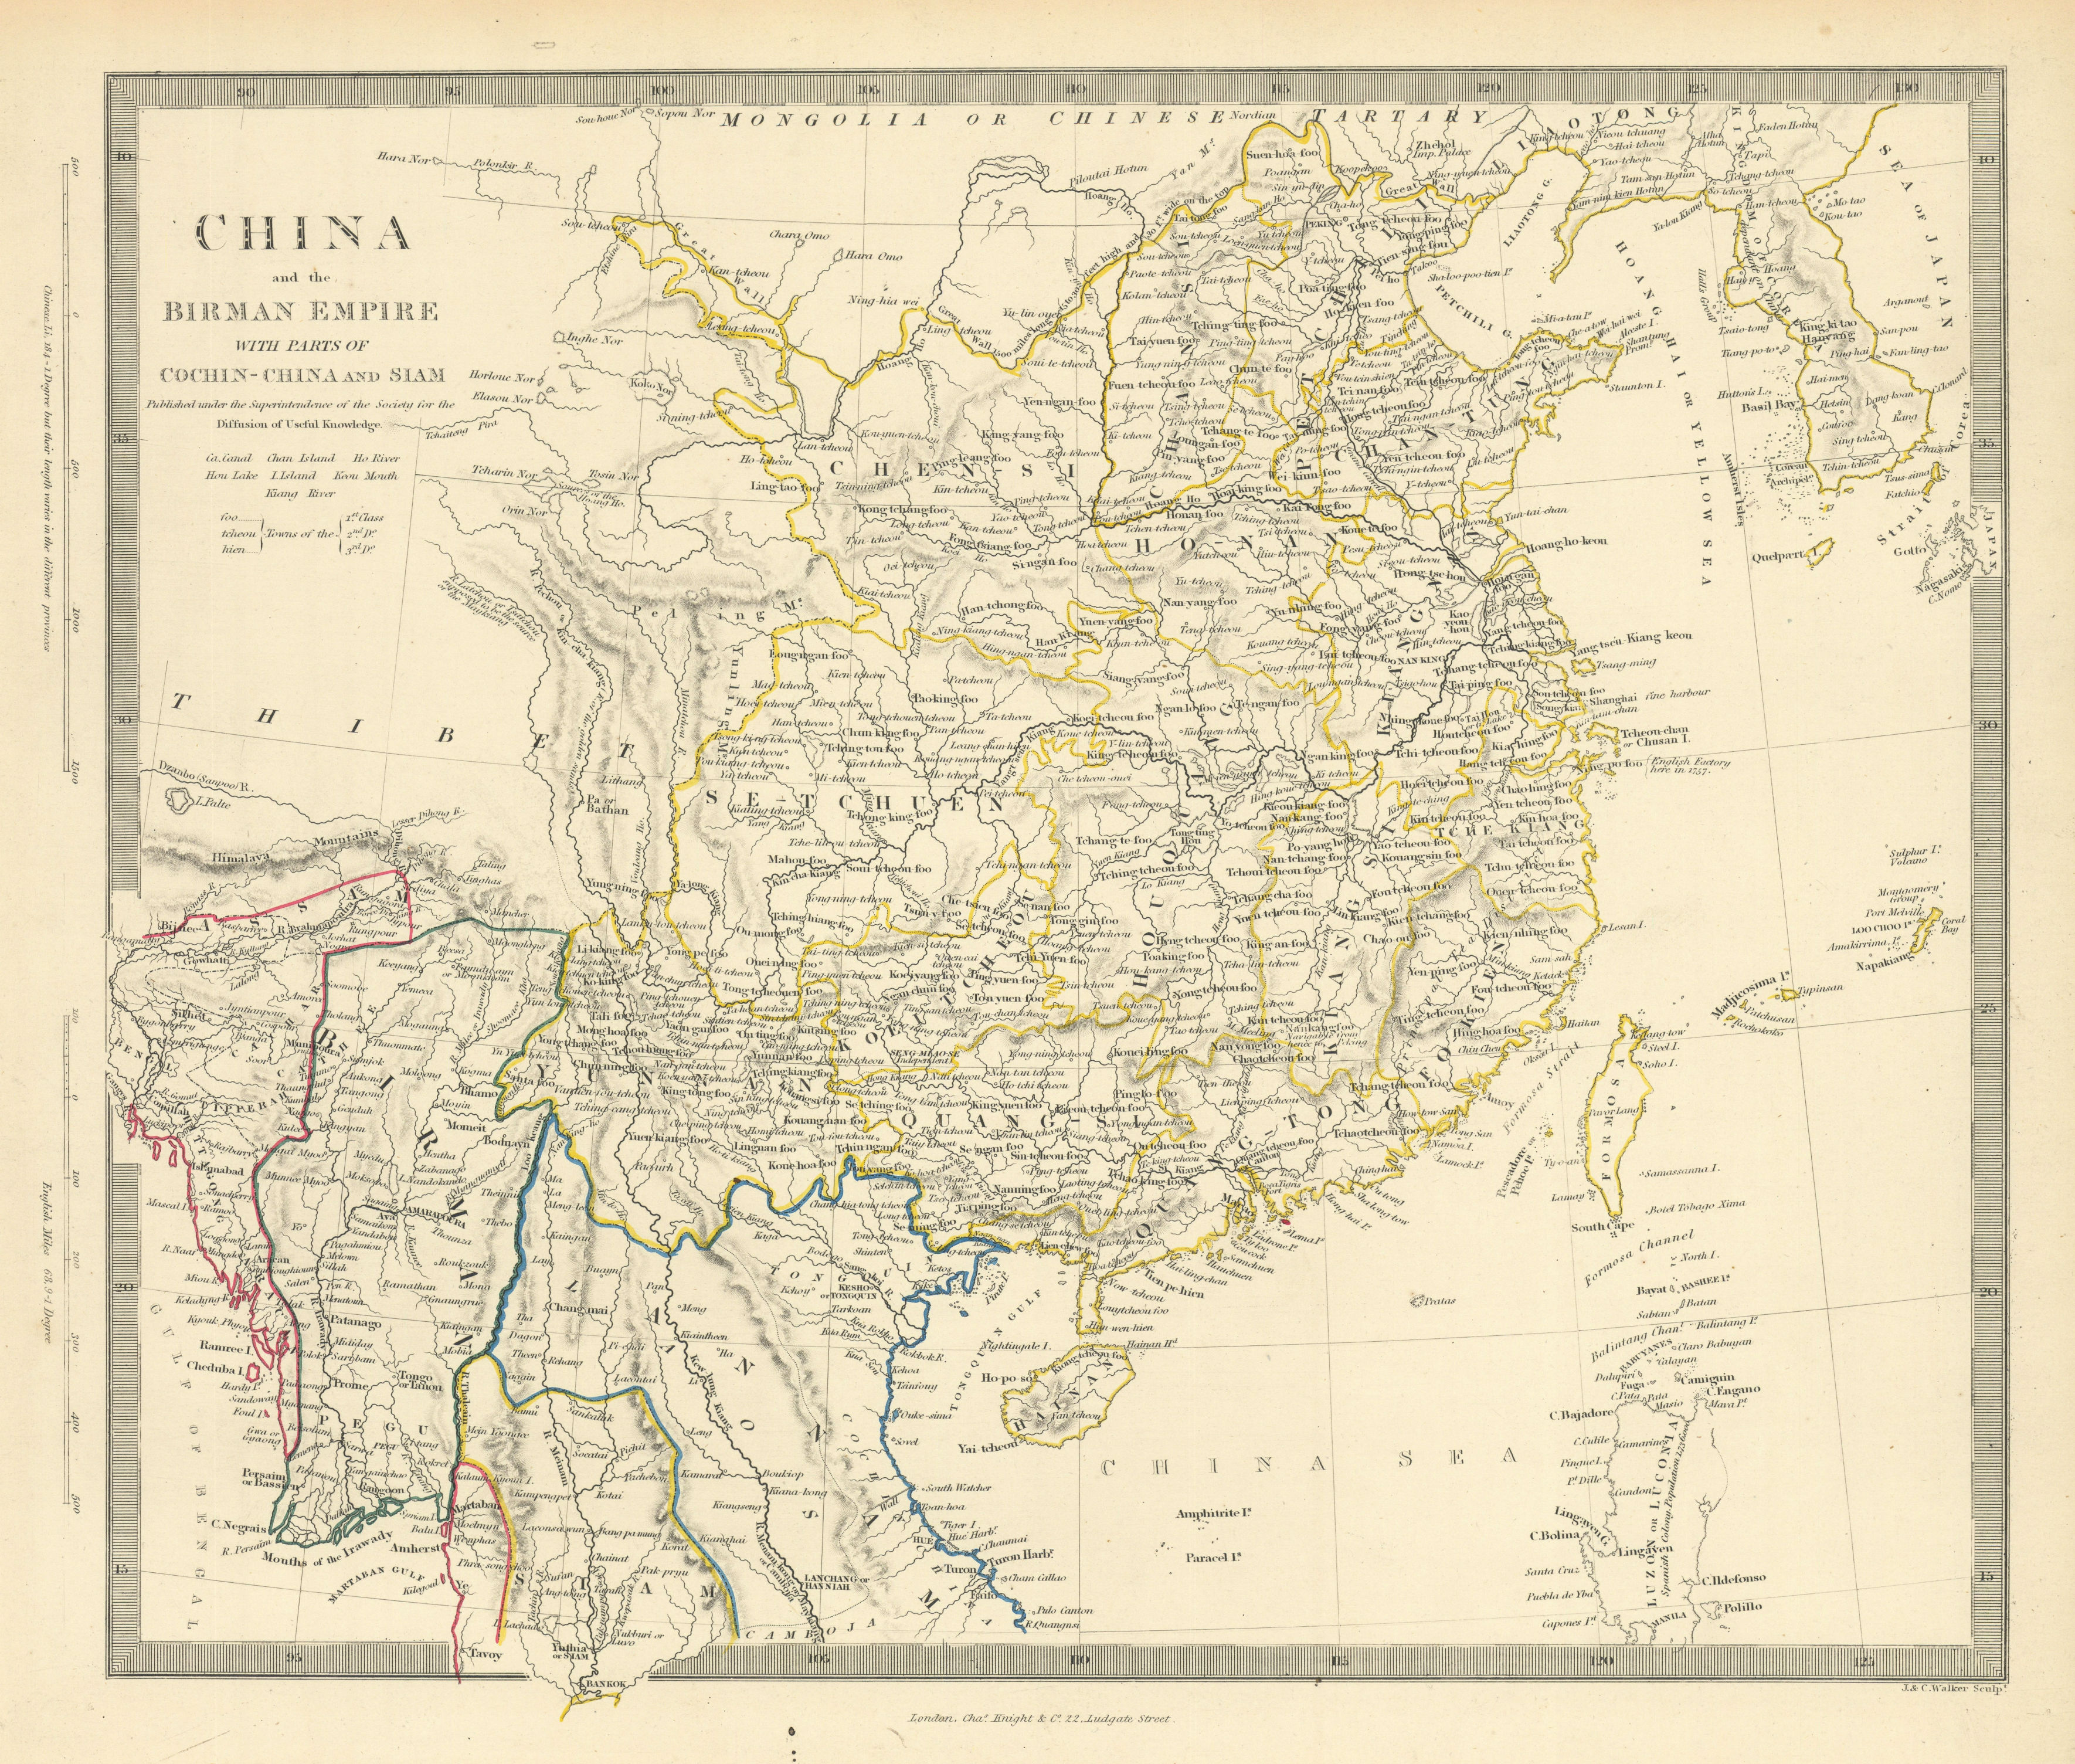 Associate Product CHINA & BIRMAN EMPIRE. Burma Cochinchina Siam Thailand Korea. SDUK 1851 map